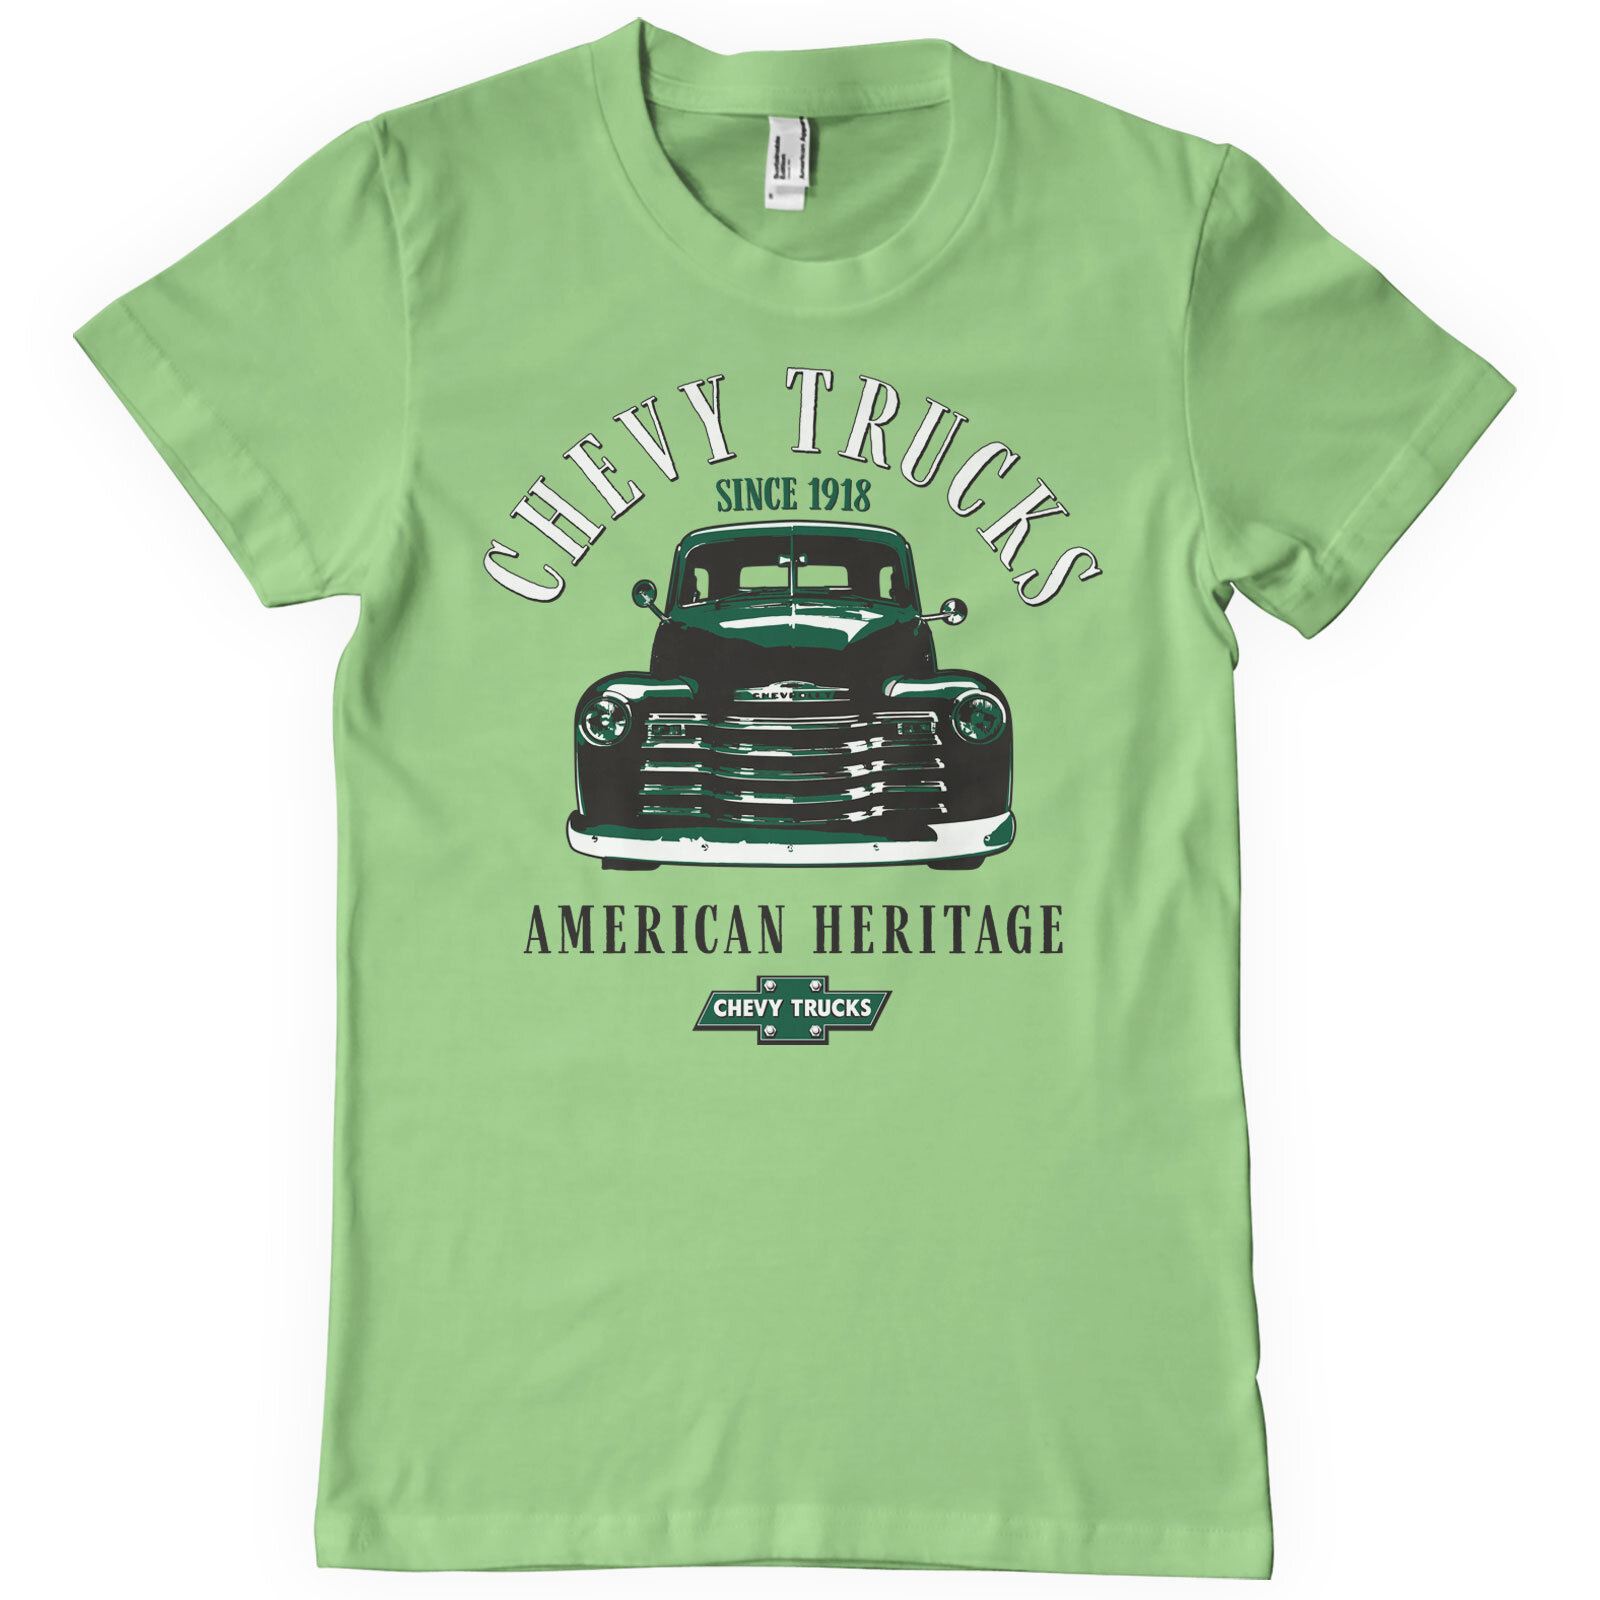 Chevy Trucks - American Heritage T-Shirt